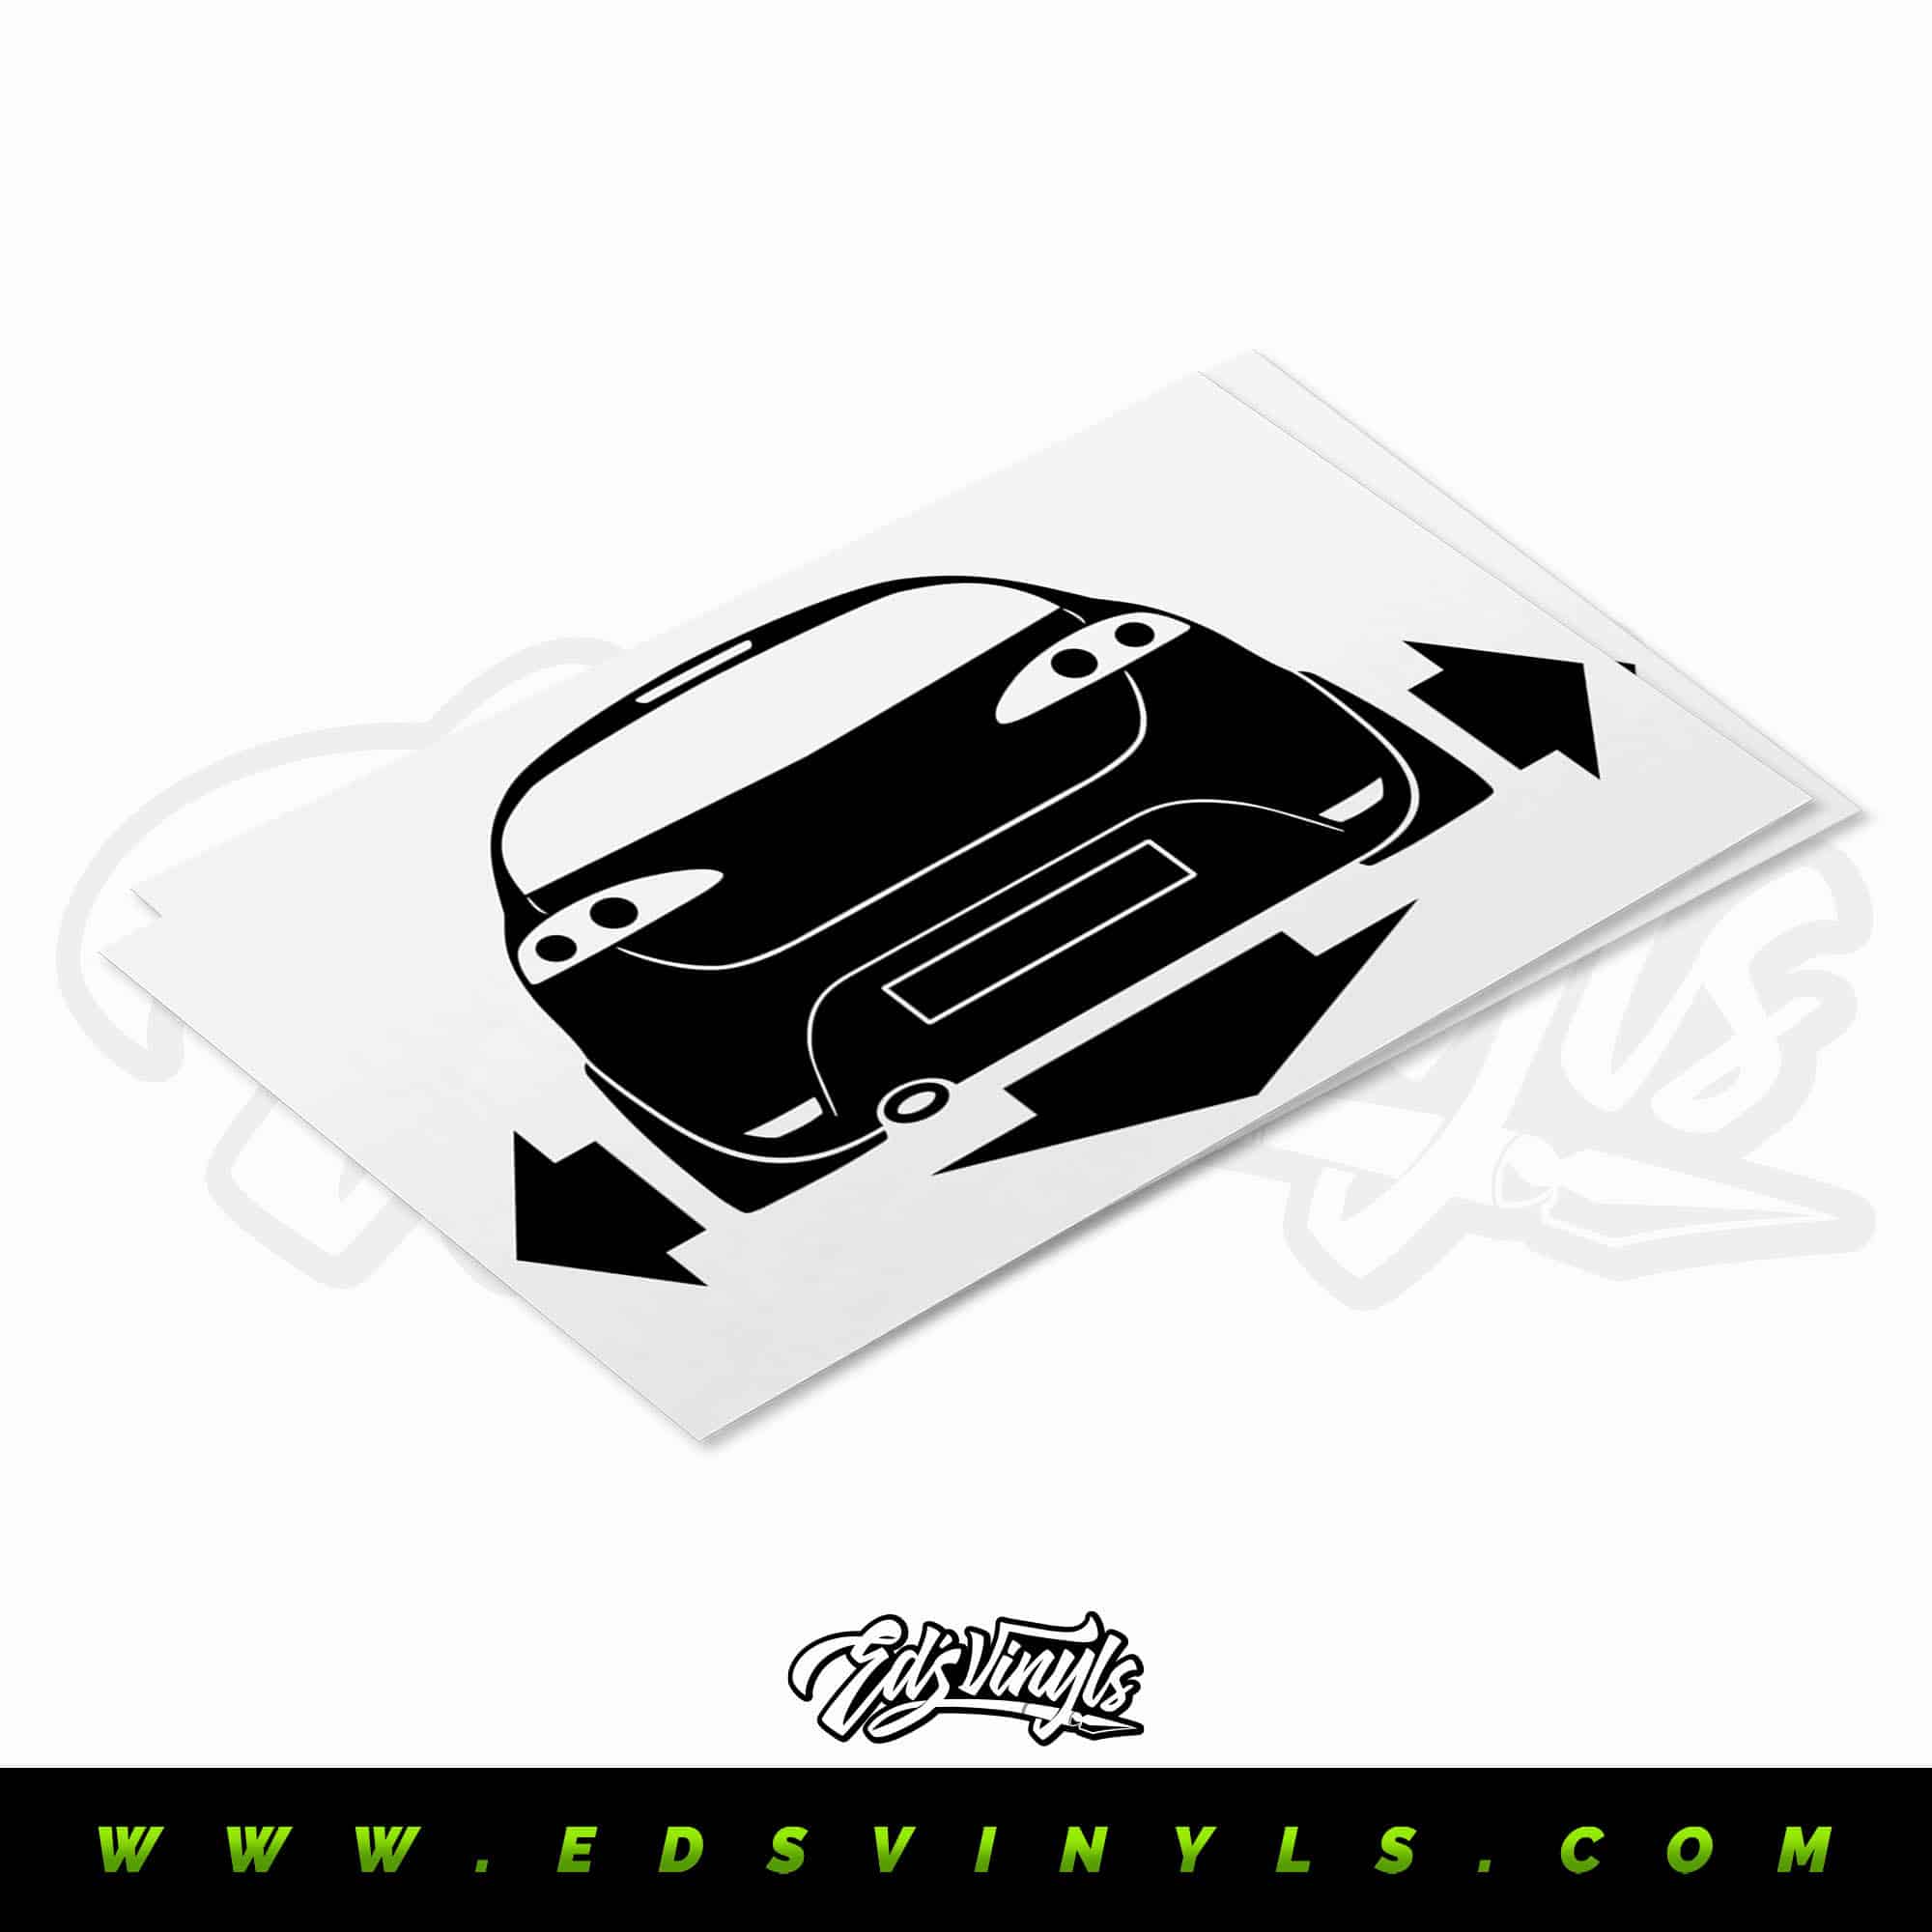 Silueta trasera SEAT Leon MK3 - Edsvinyls